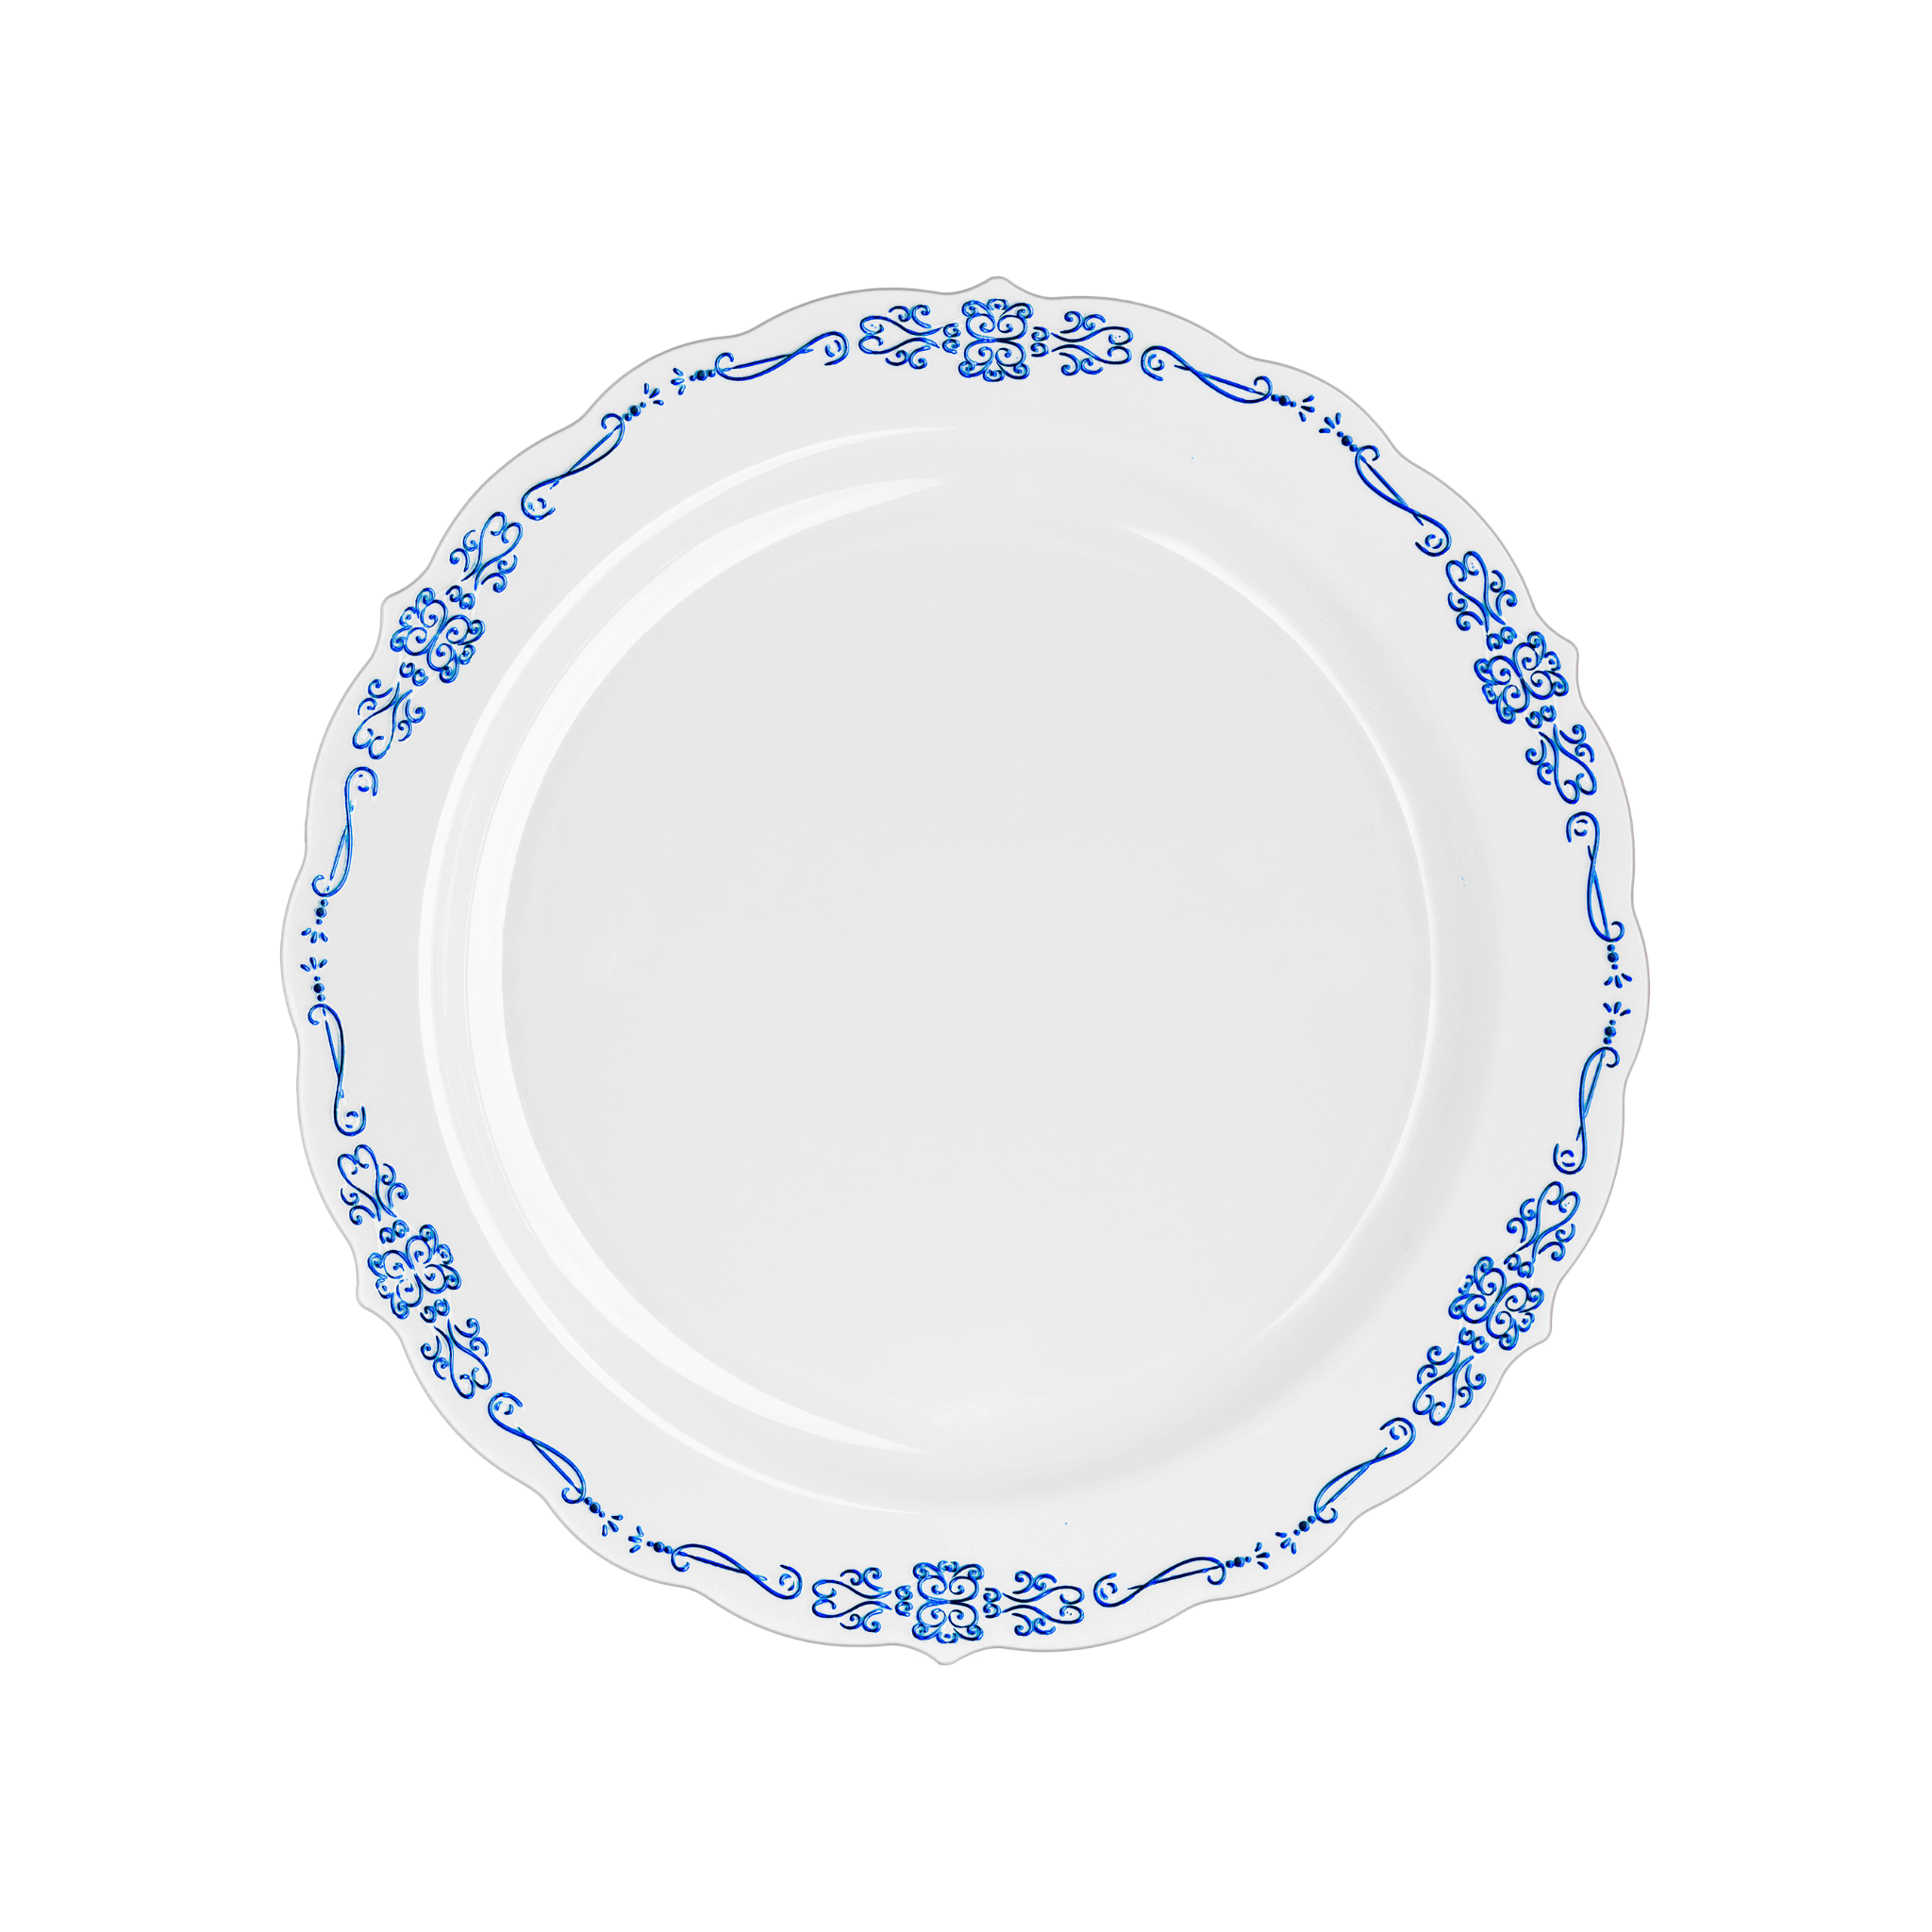 9" White / Navy Victorian Design Plastic Plates (120 Count) - Yom Tov Settings